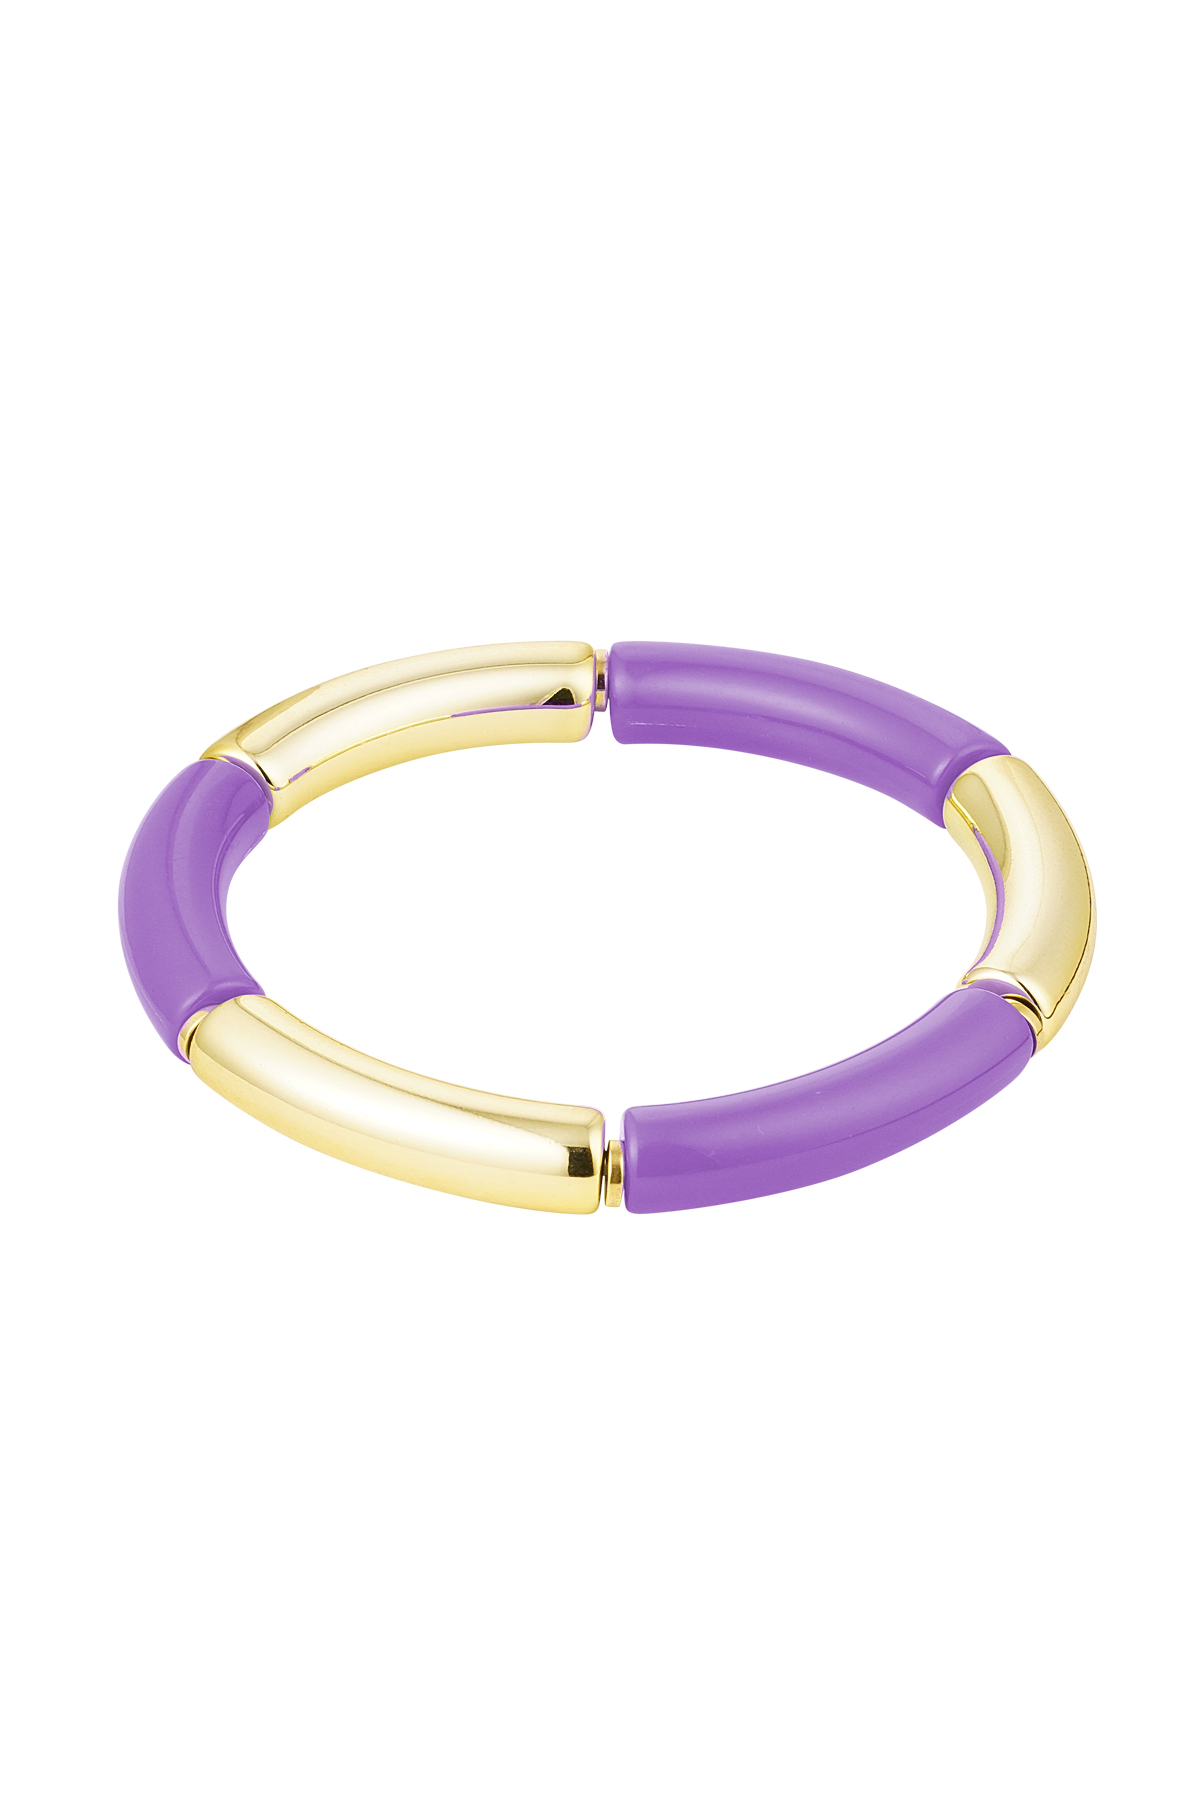 Bracelet tube or/couleur Lilas &amp; Or Acrylique